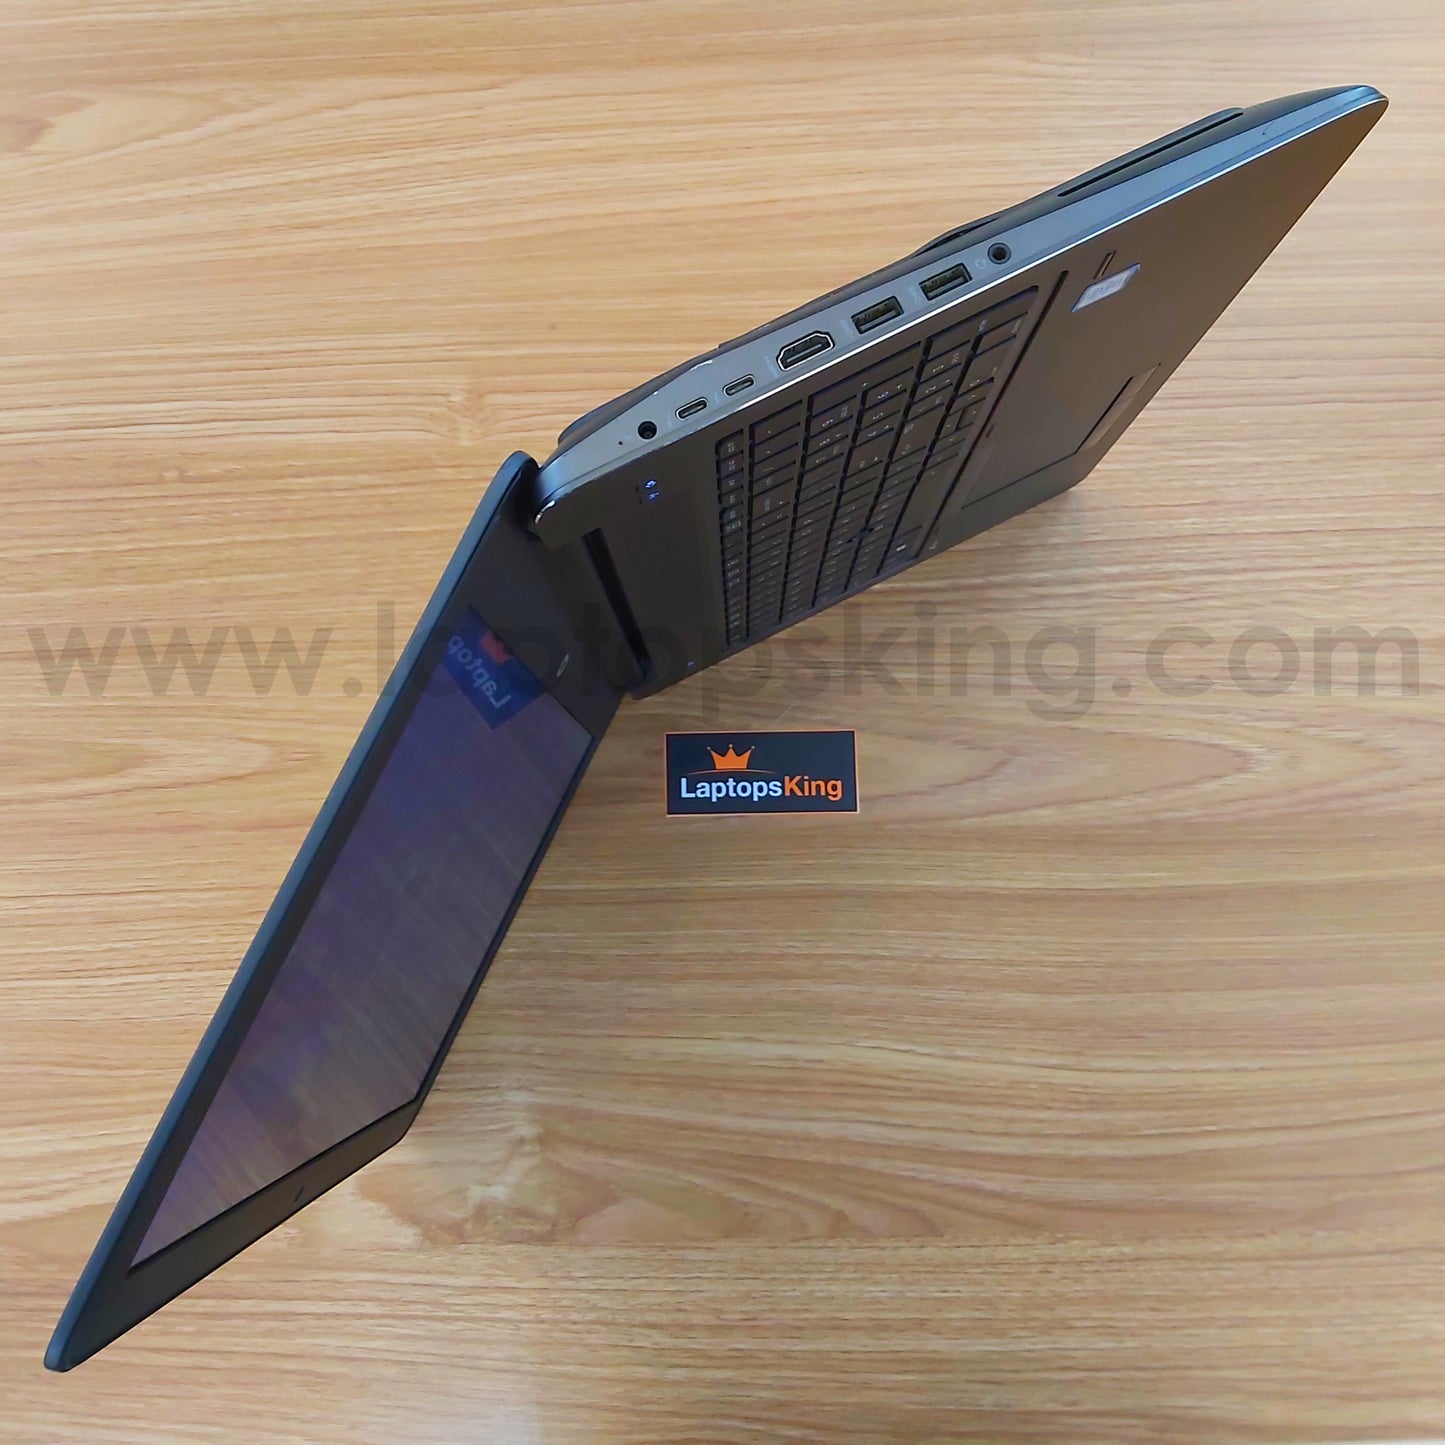 Hp ZBook 15 i7 Laptop (Open Box)